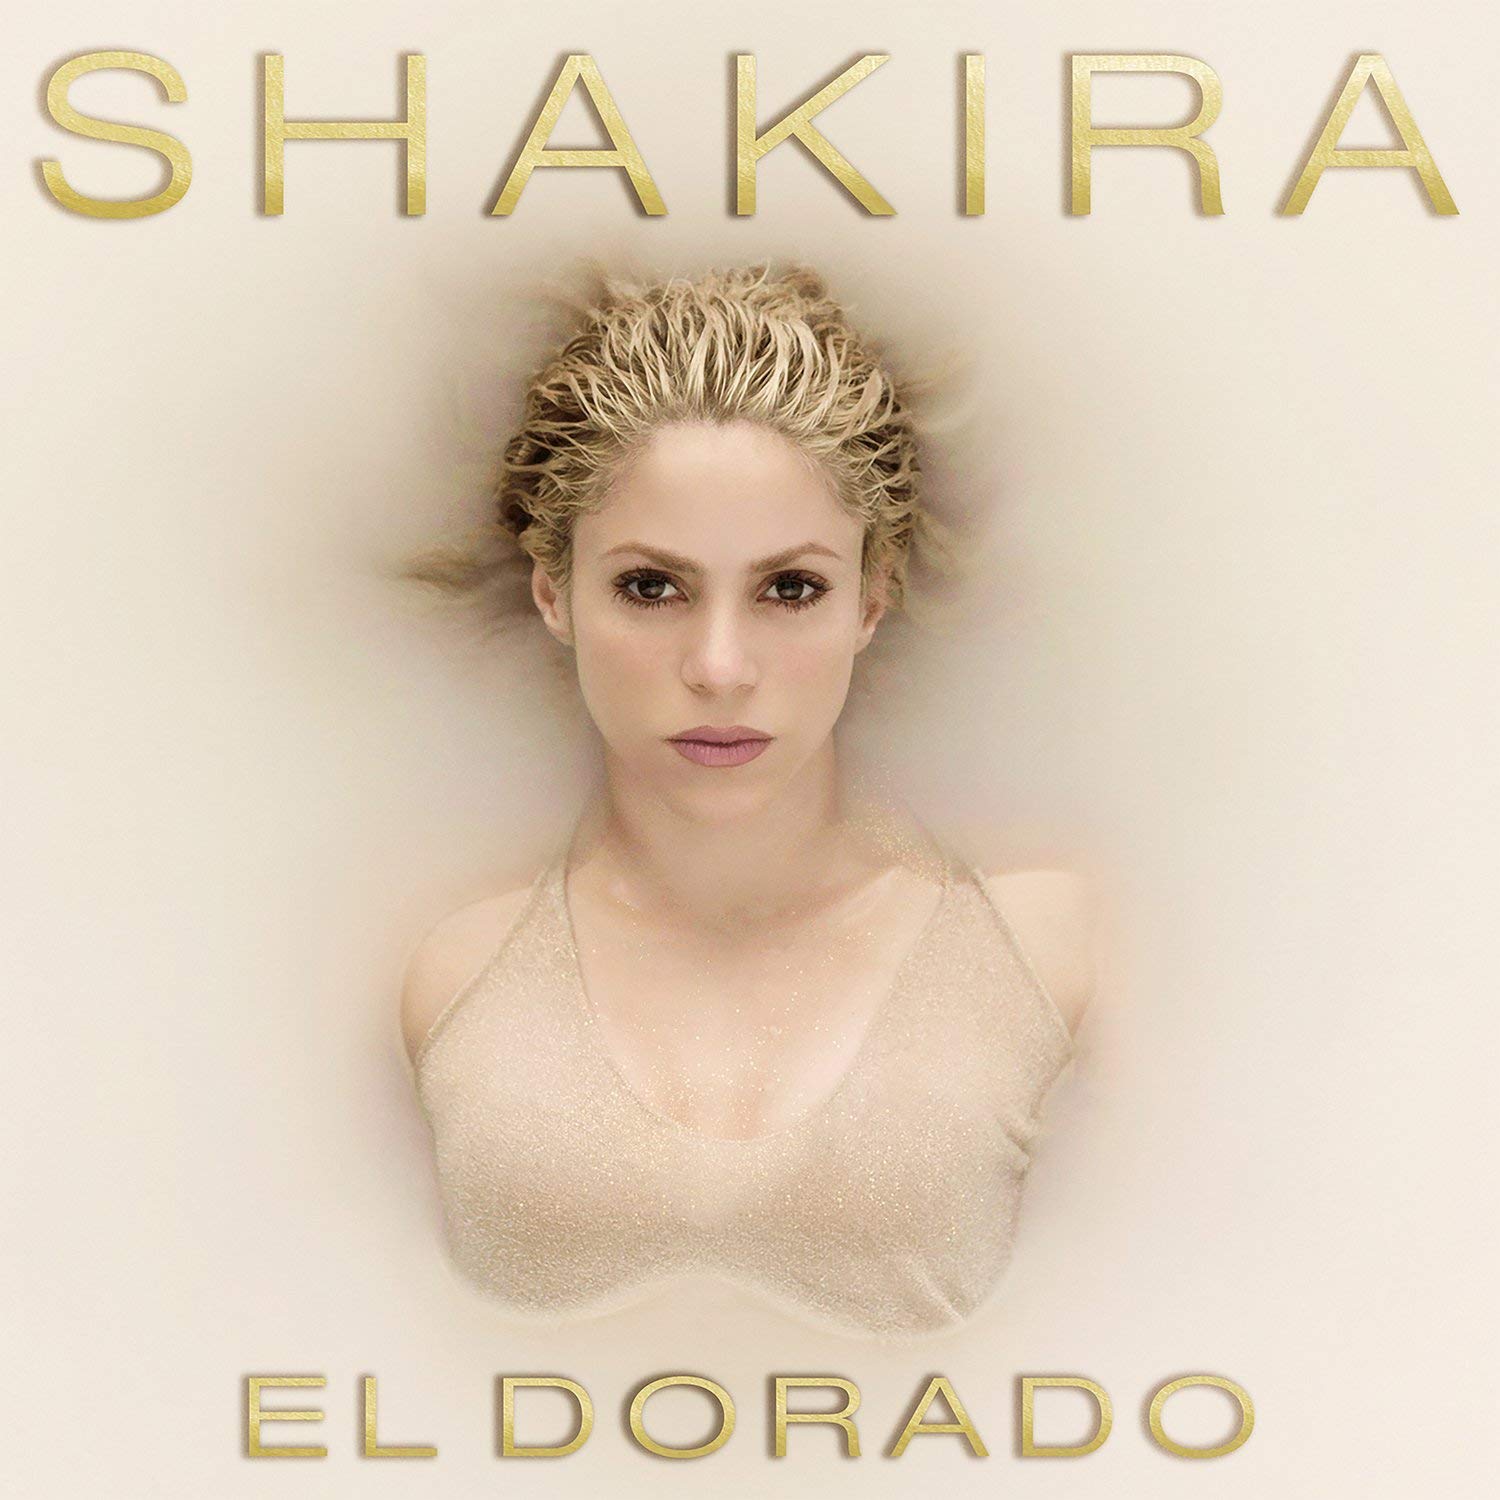 El Dorado Shakira Fandom